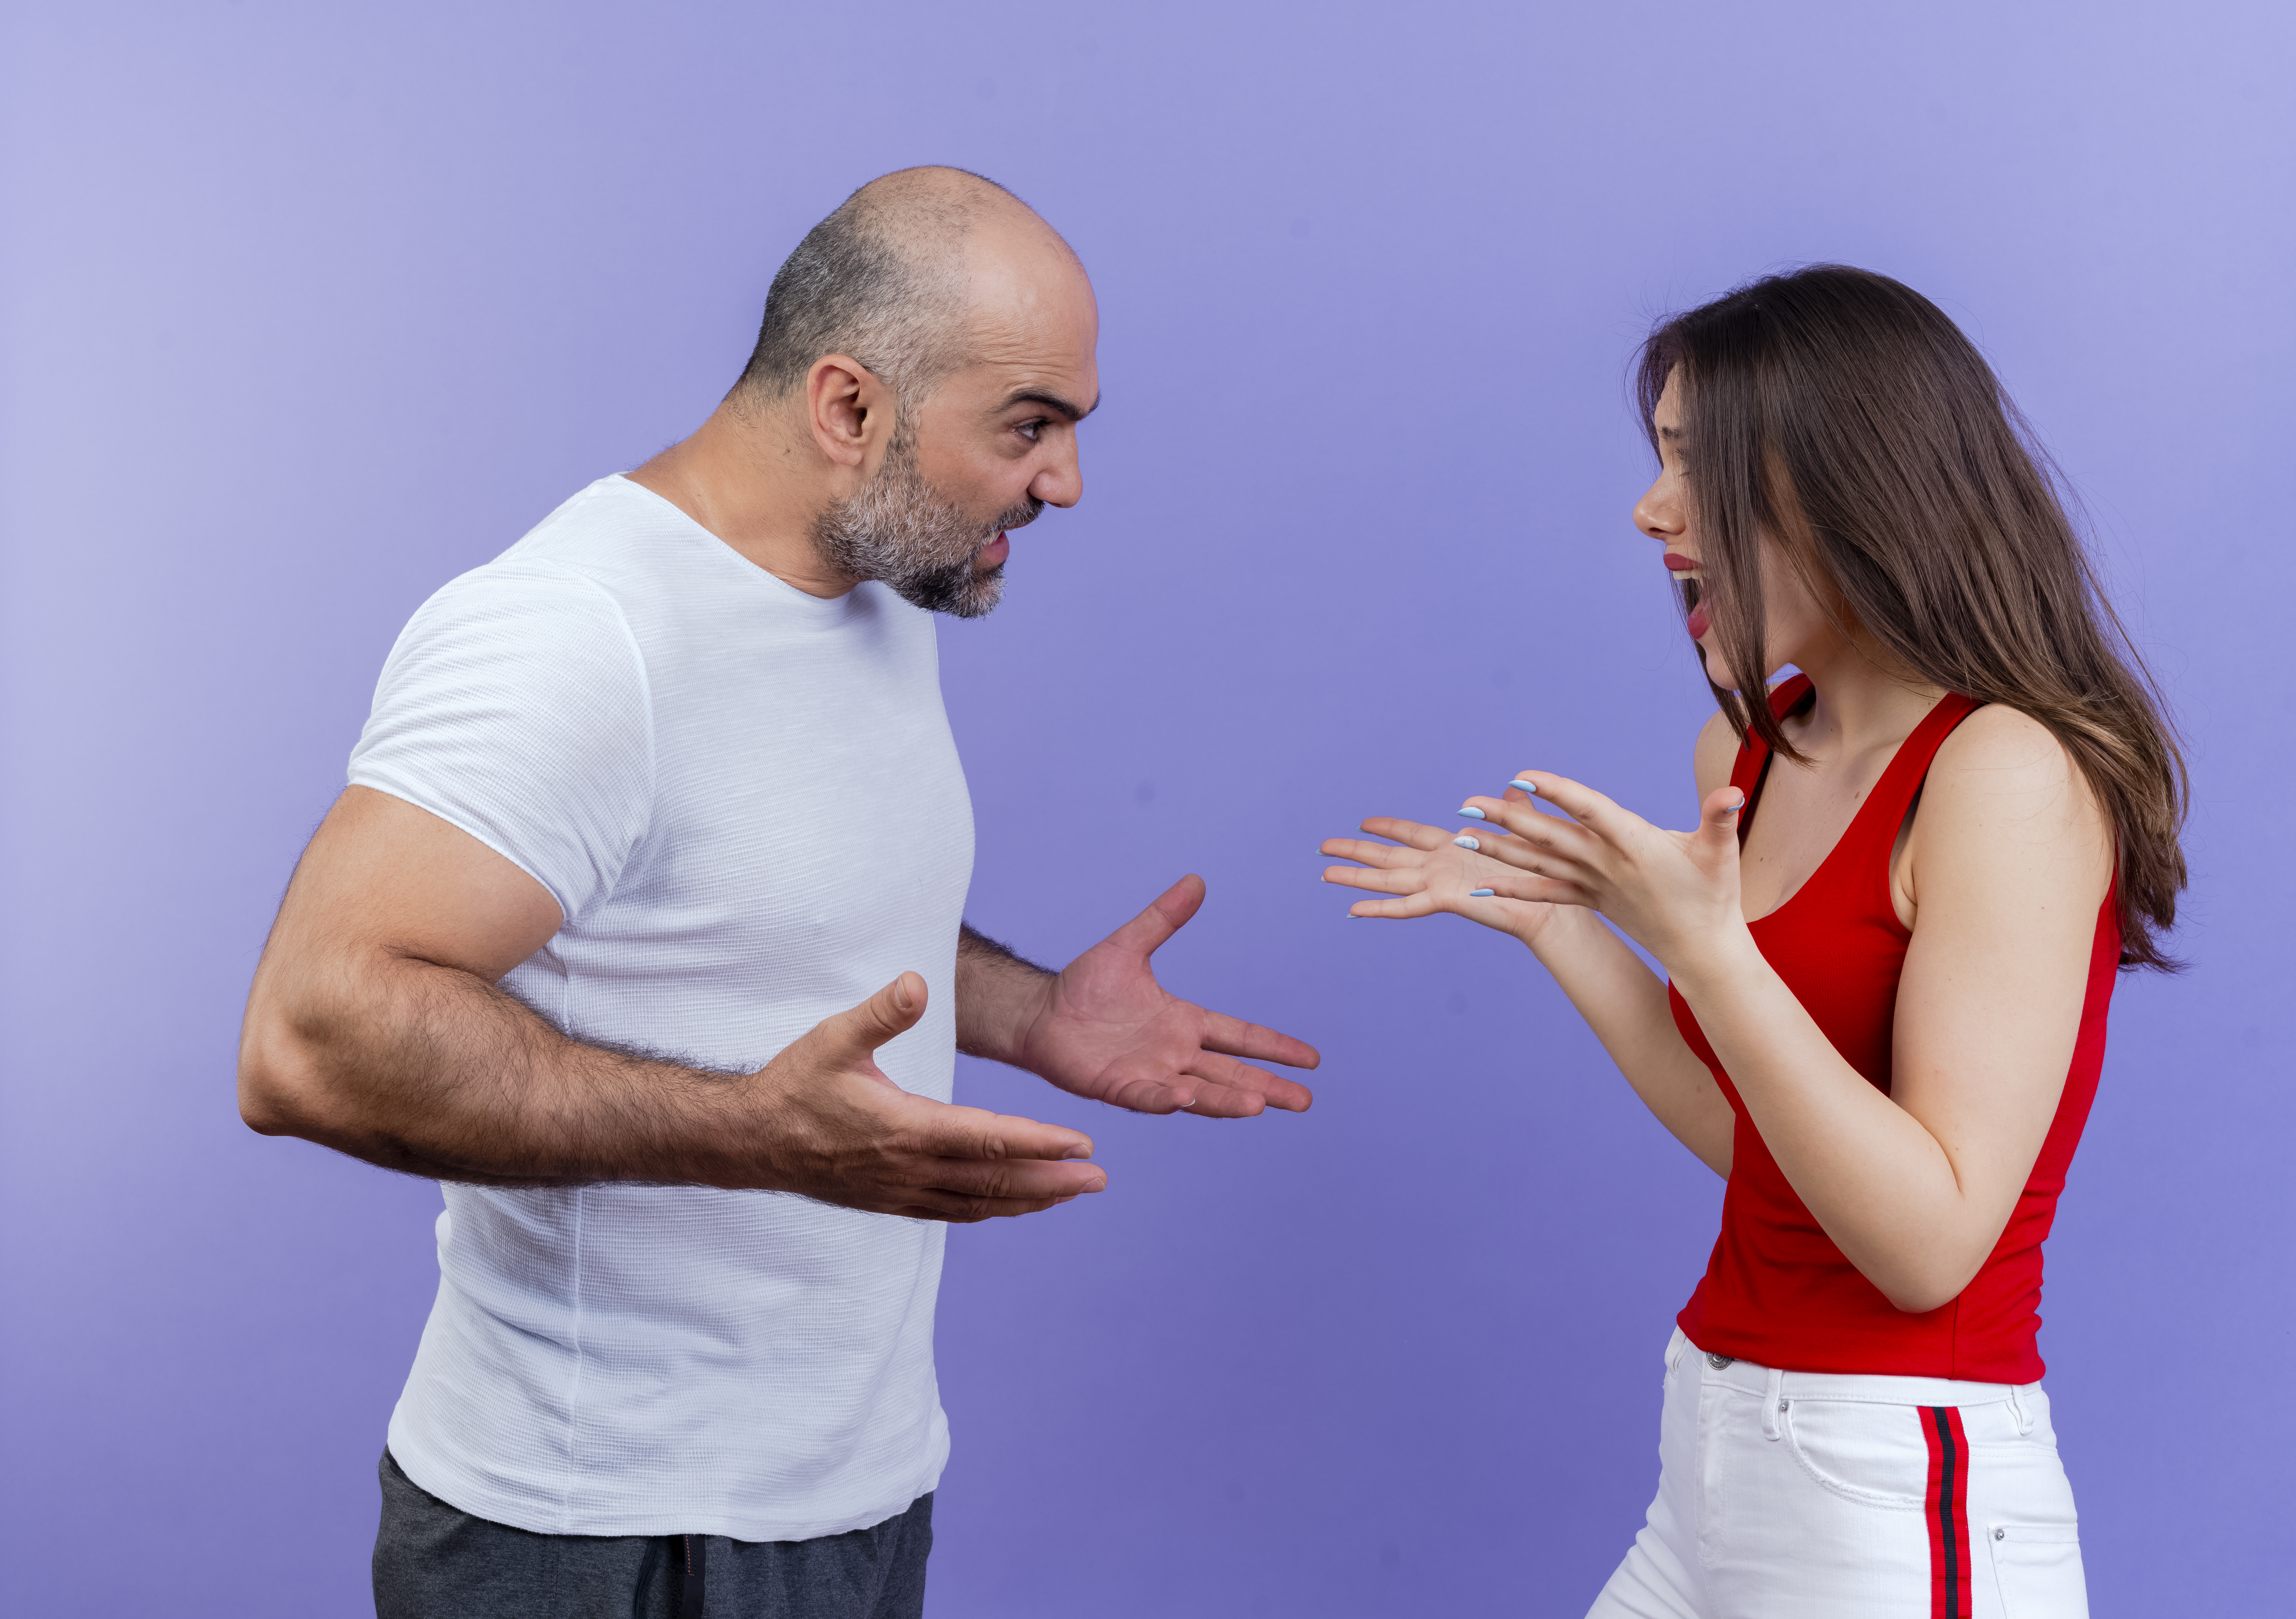 Man and woman arguing | Source: stockking on Freepik